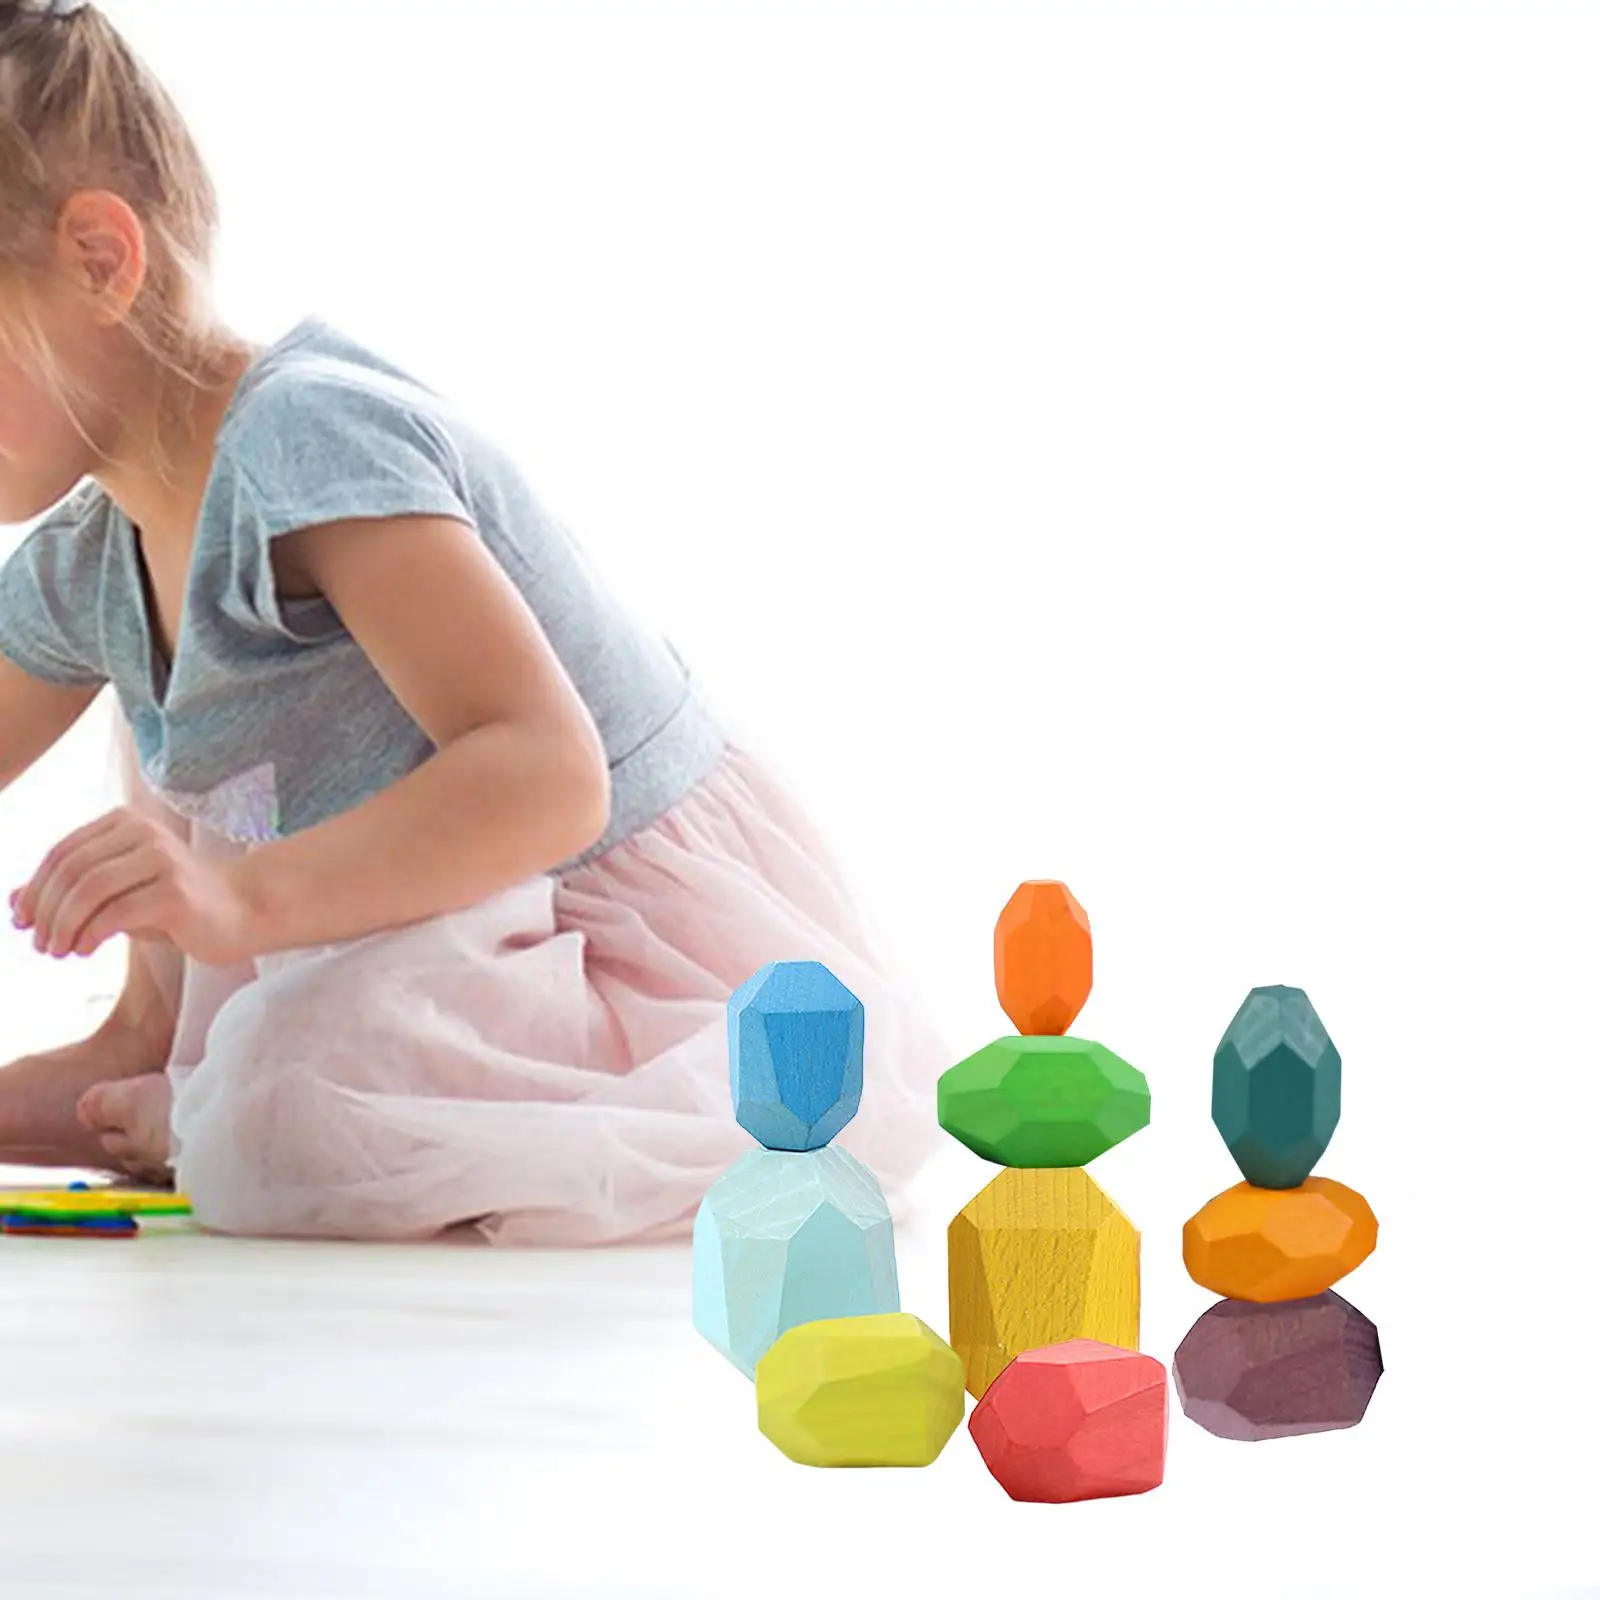 Wooden Balancing Stacking Stones Montessori Puzzle Toys Lightweight Artware Building Blocks Stacking Game for Boys Girls Kids